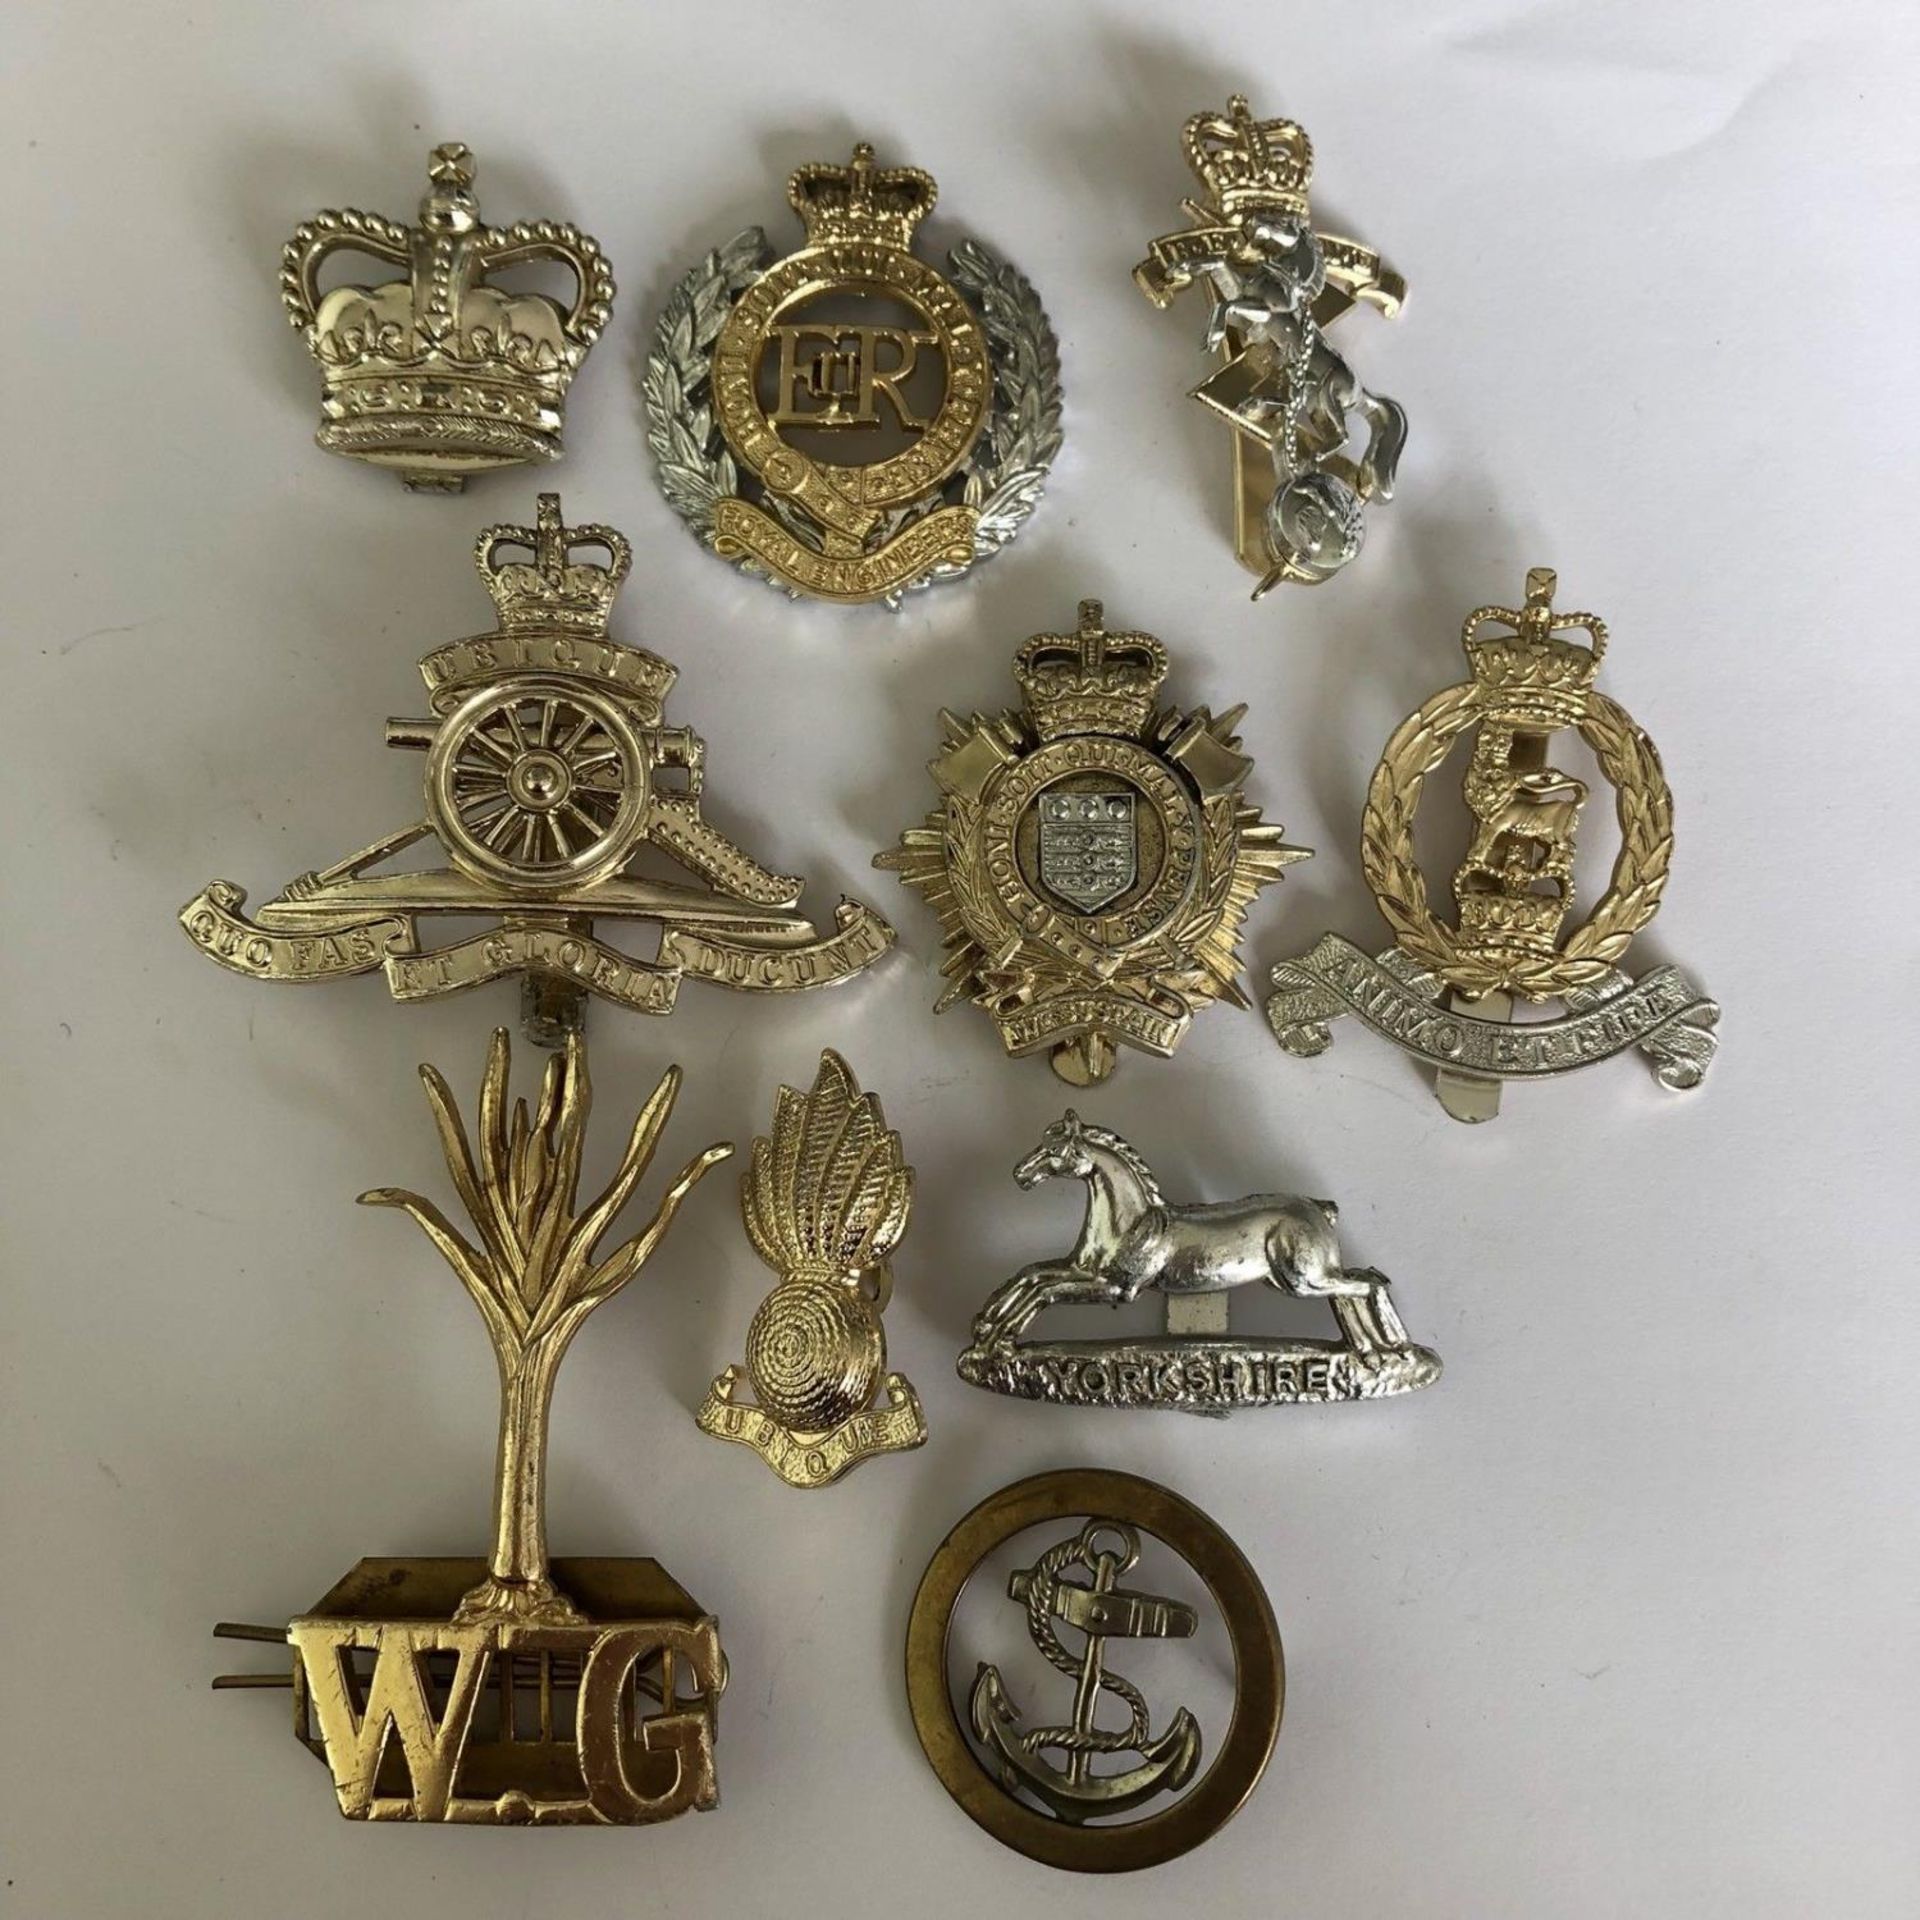 Group of 10 British military cap badges